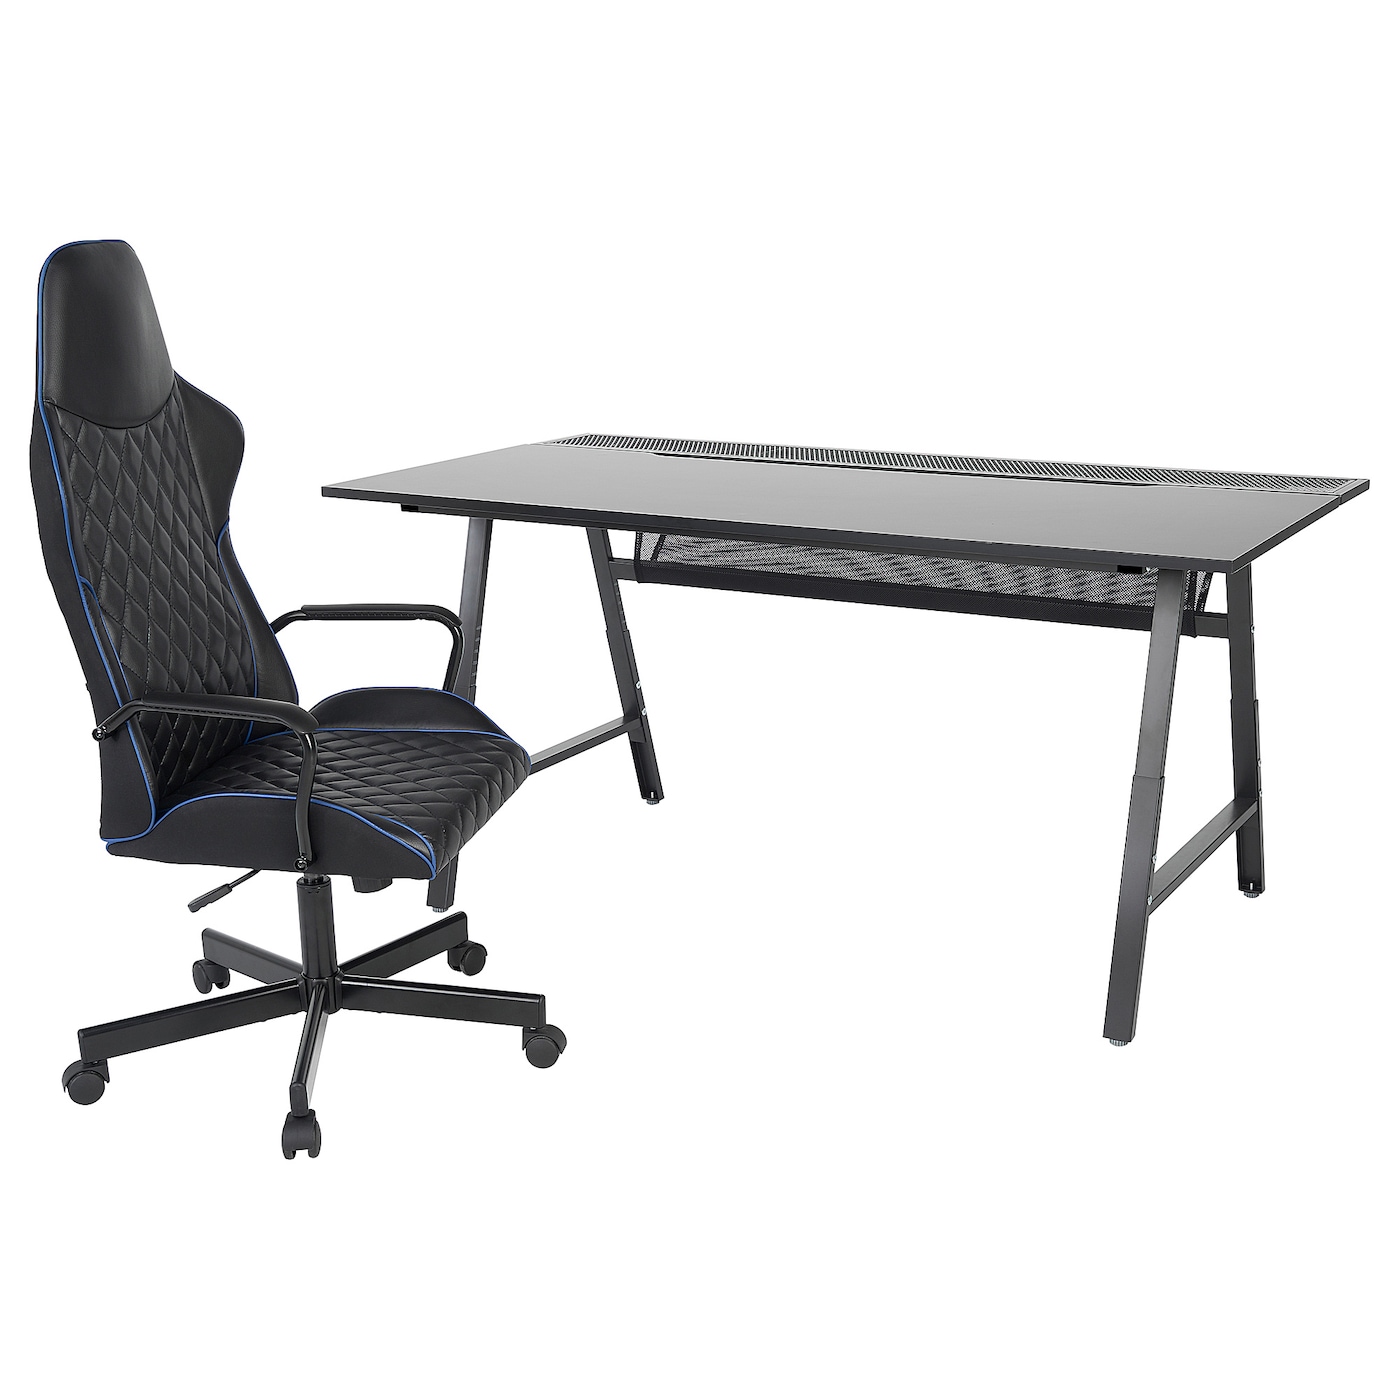 Игровой стол и стул - IKEA UTESPELARE, 166х79х9 см, черный, УТЕСПЕЛАРЕ ИКЕА